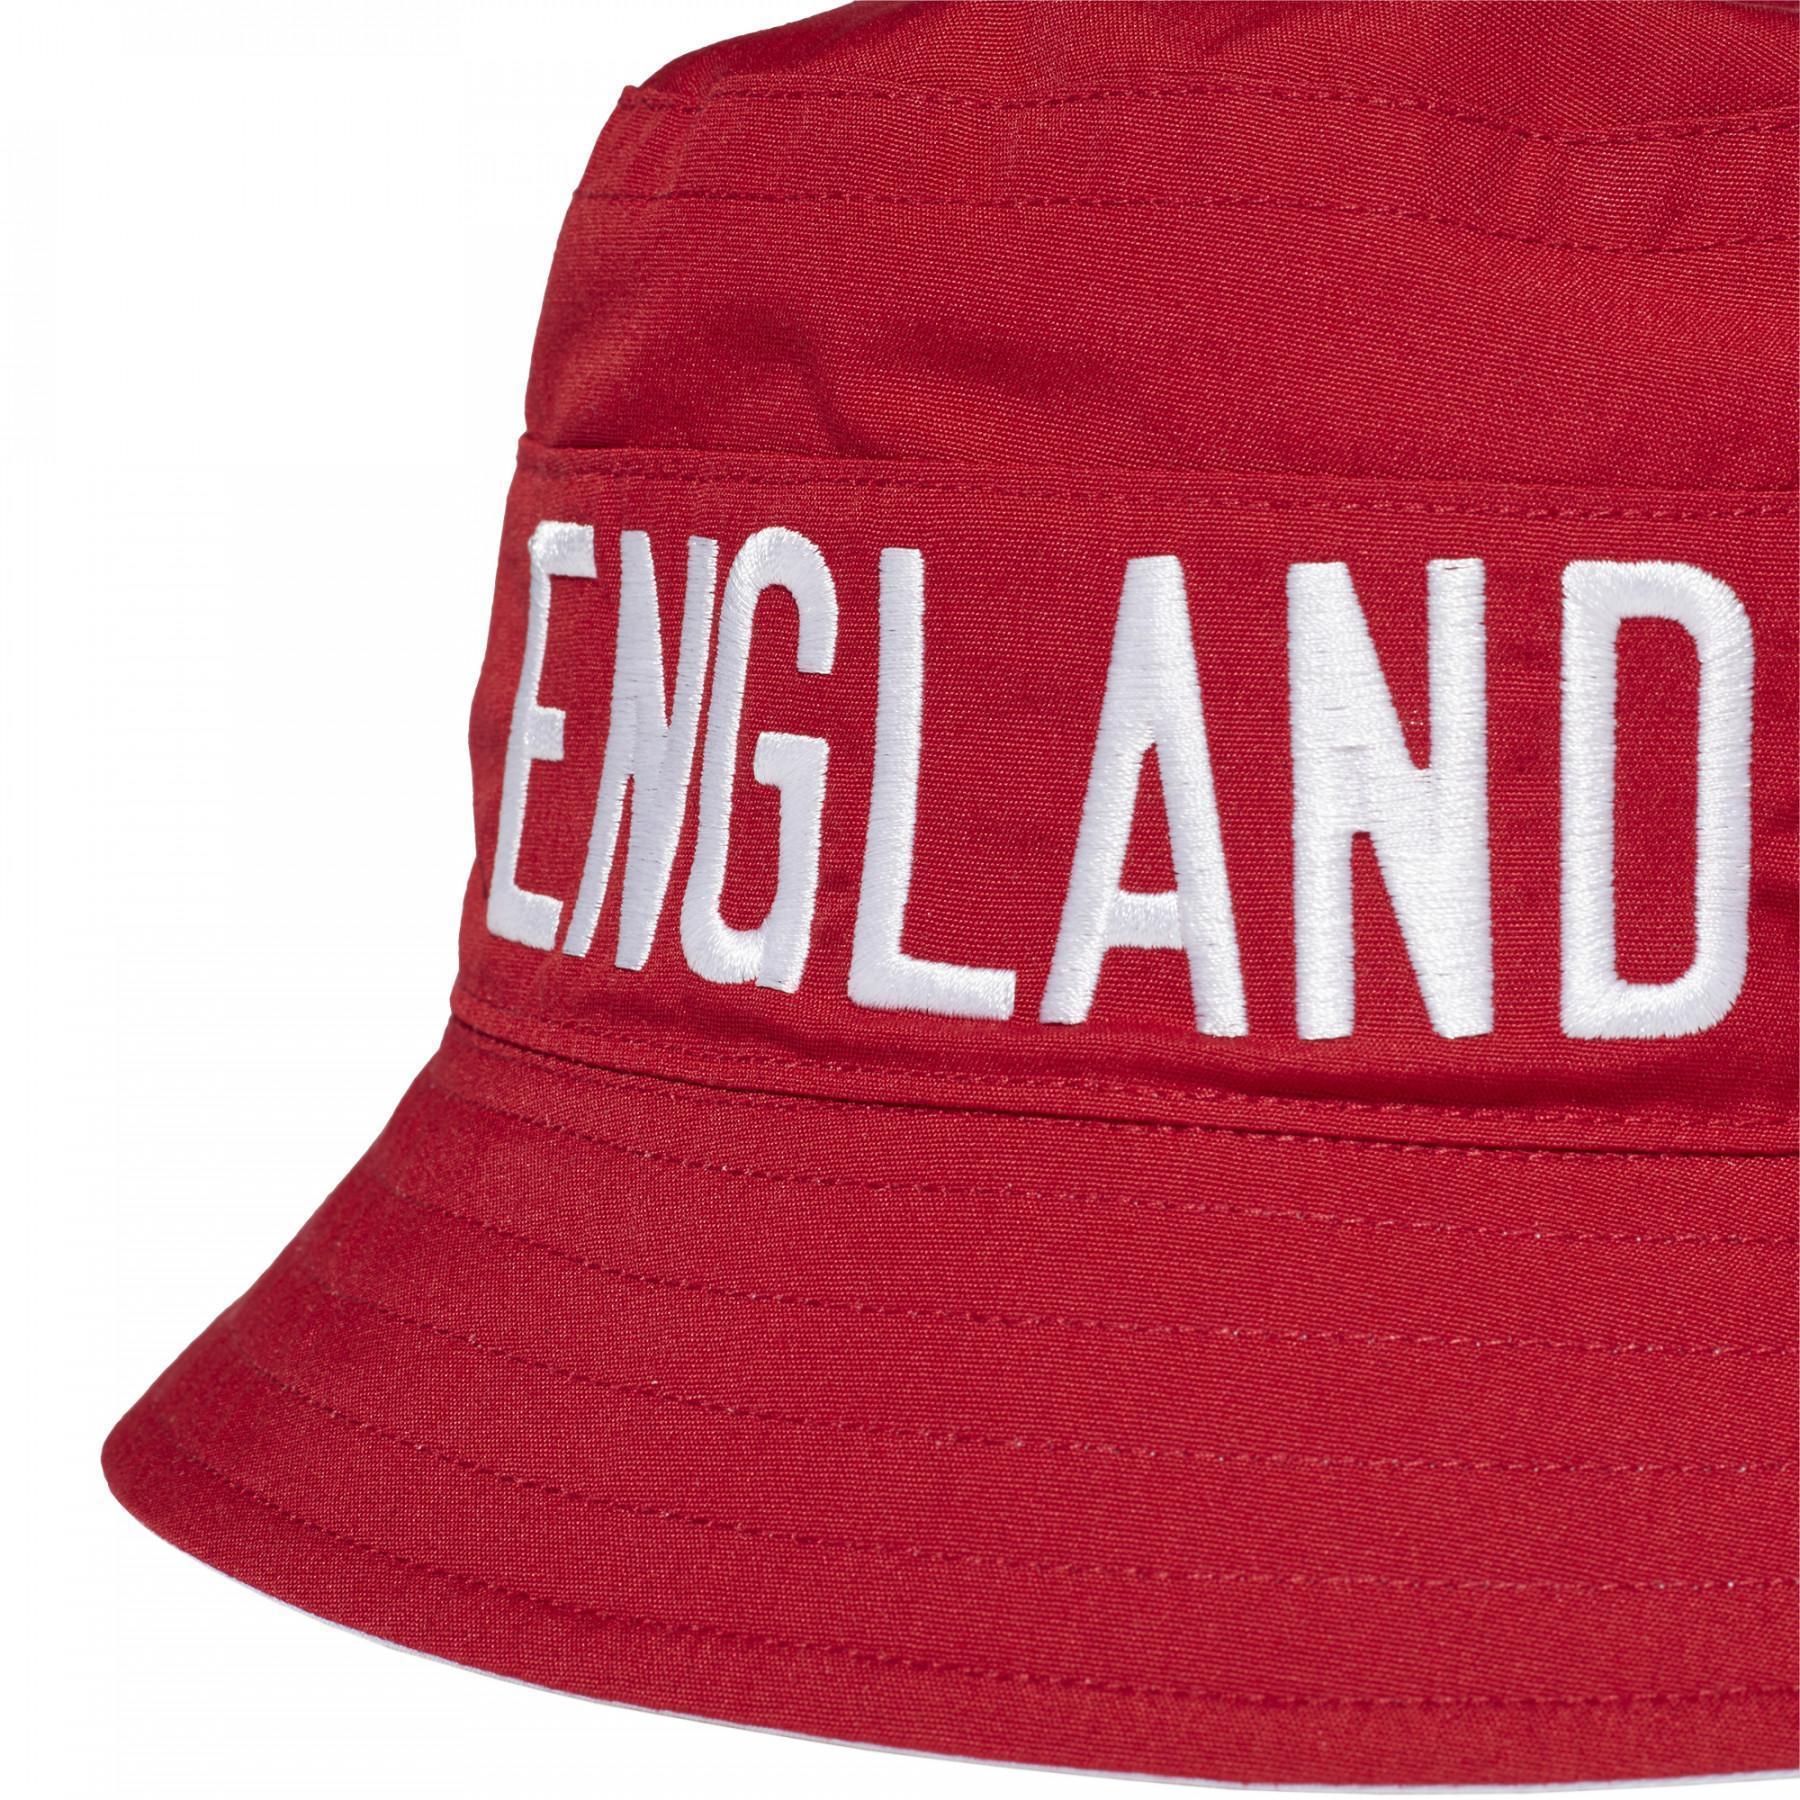 Omkeerbare spoel adidas Angleterre Fan Euro 2020